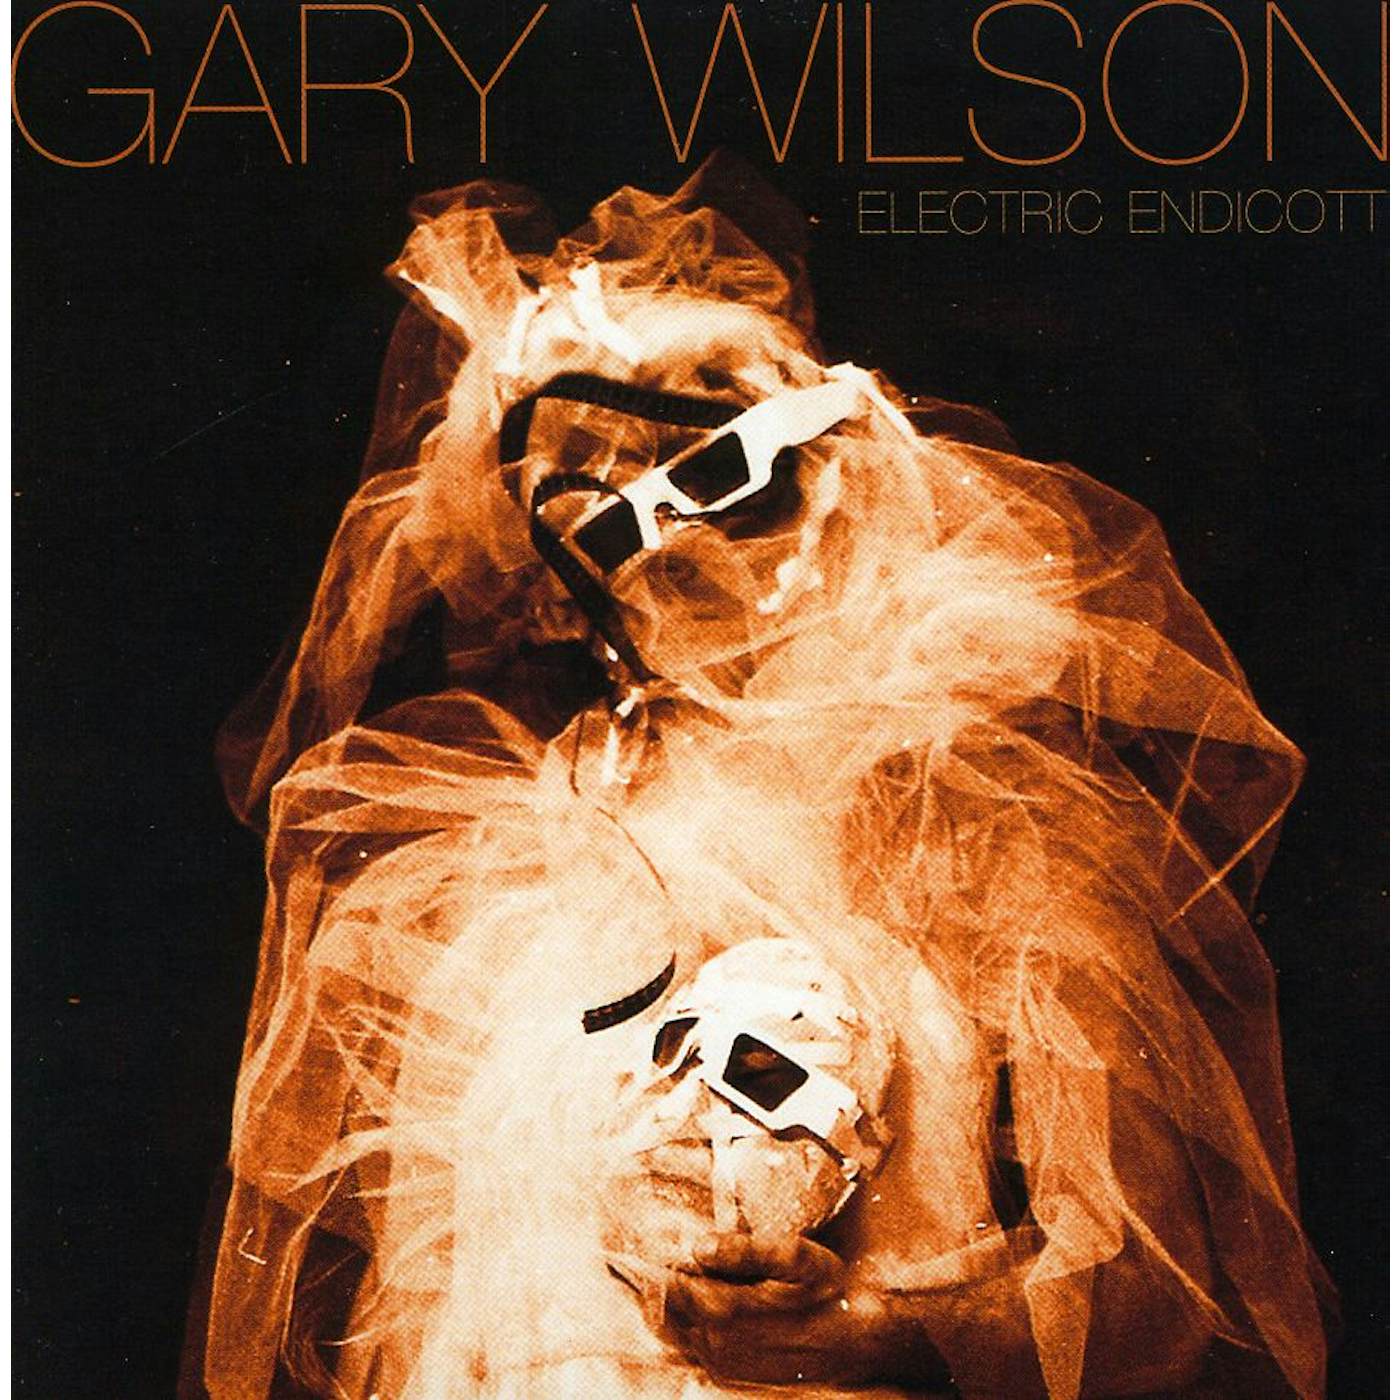 Gary Wilson ELECTRIC ENDICOTT CD